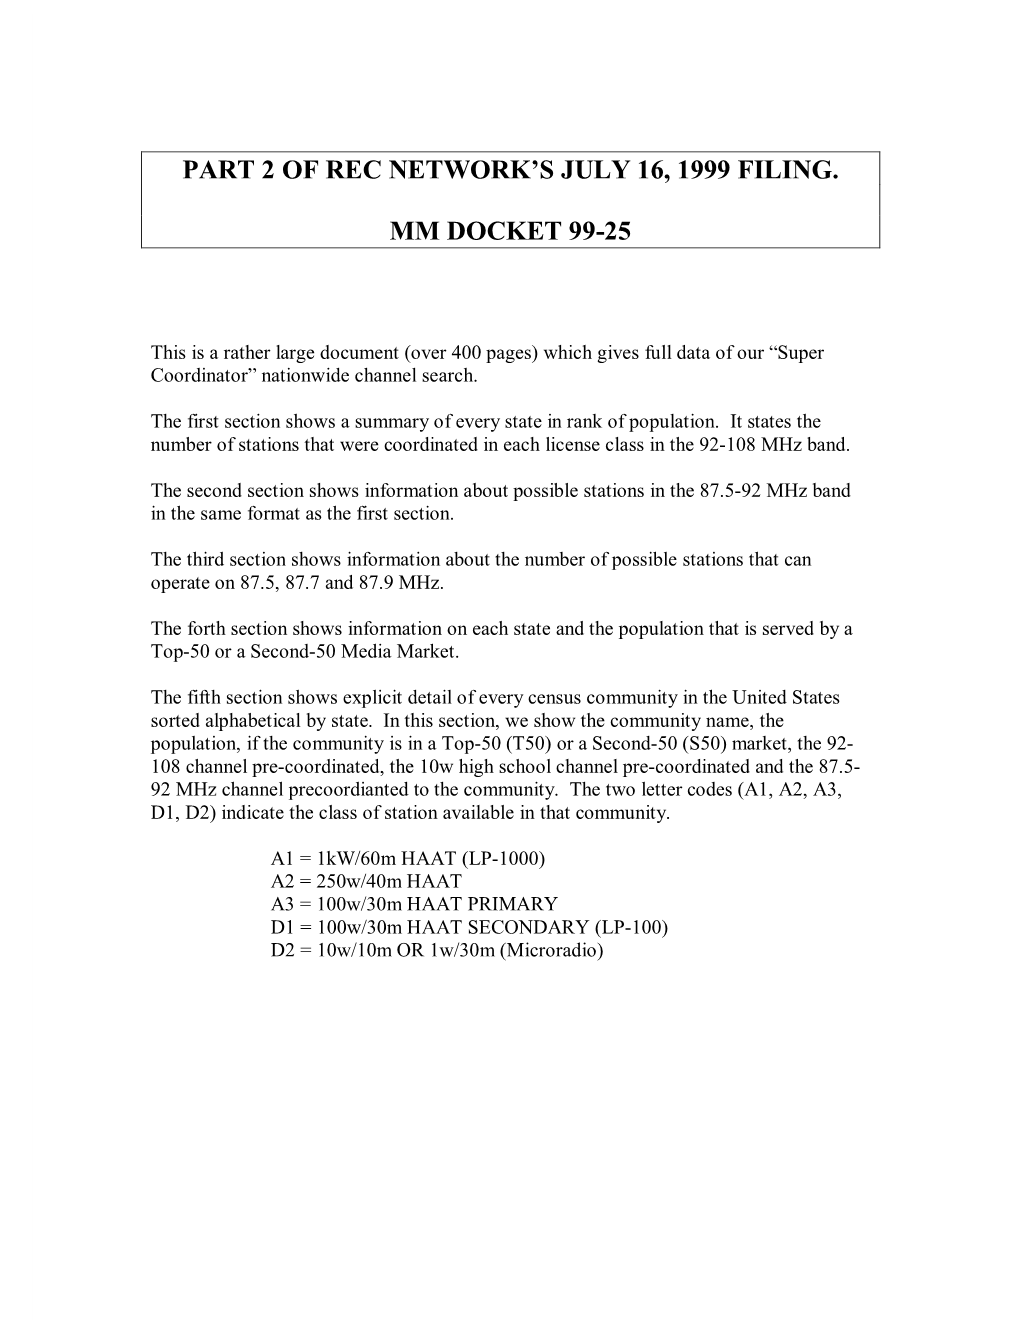 Part 2 of Rec Network's July 16, 1999 Filing. Mm Docket 99-25